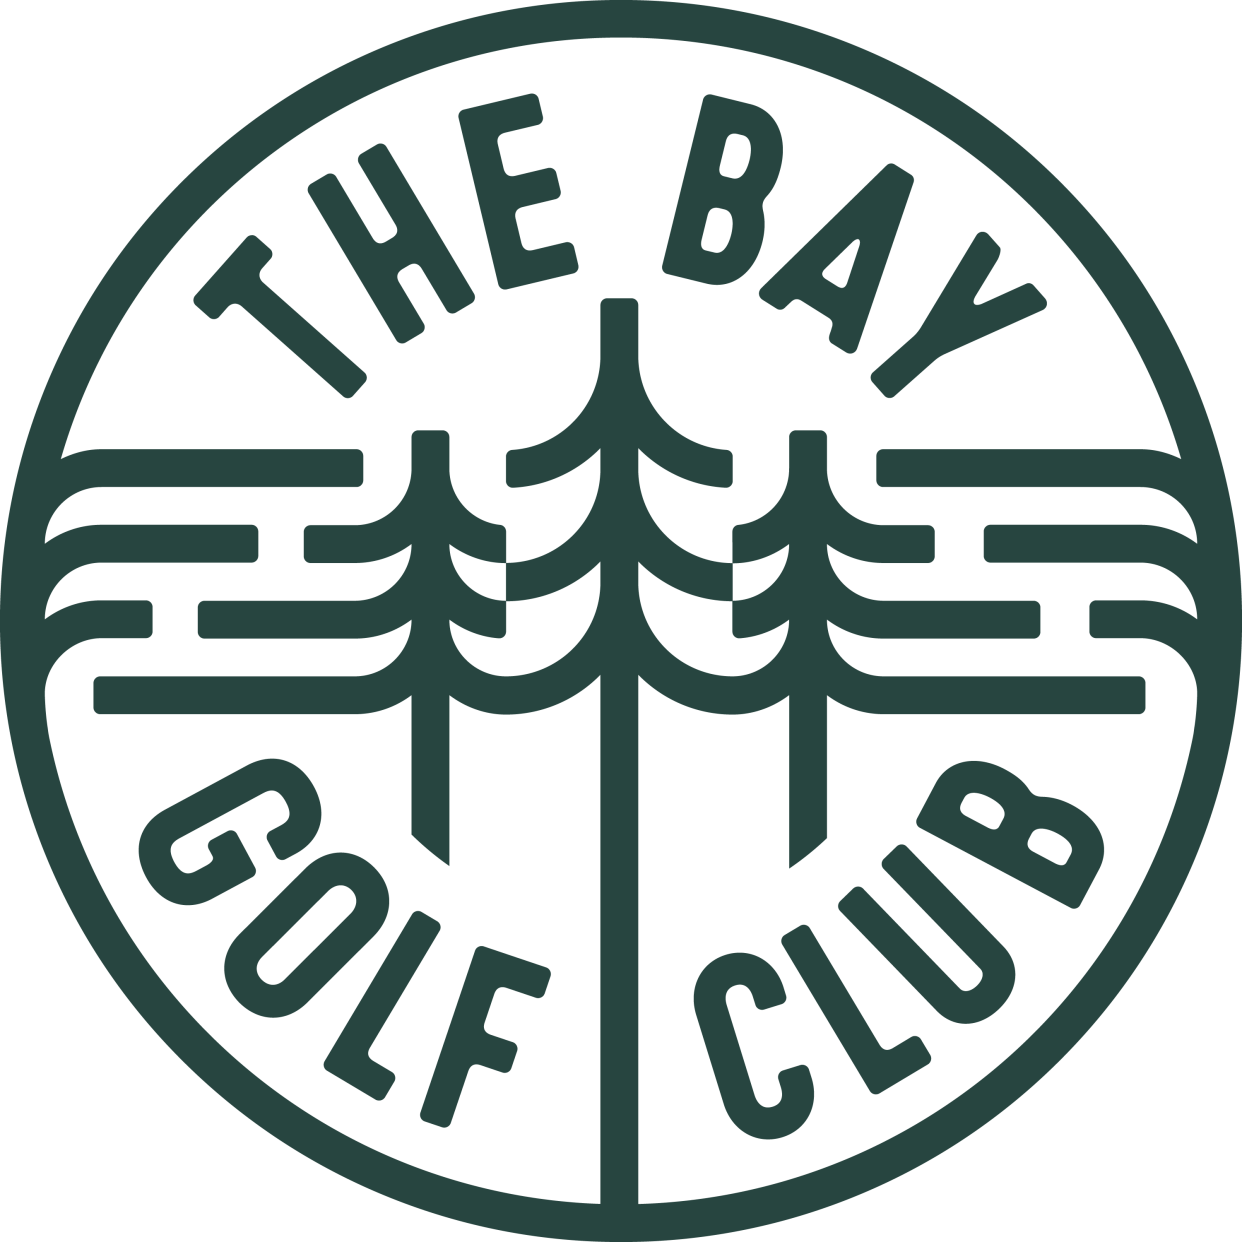 The Bay Golf Club's logo was revealed.